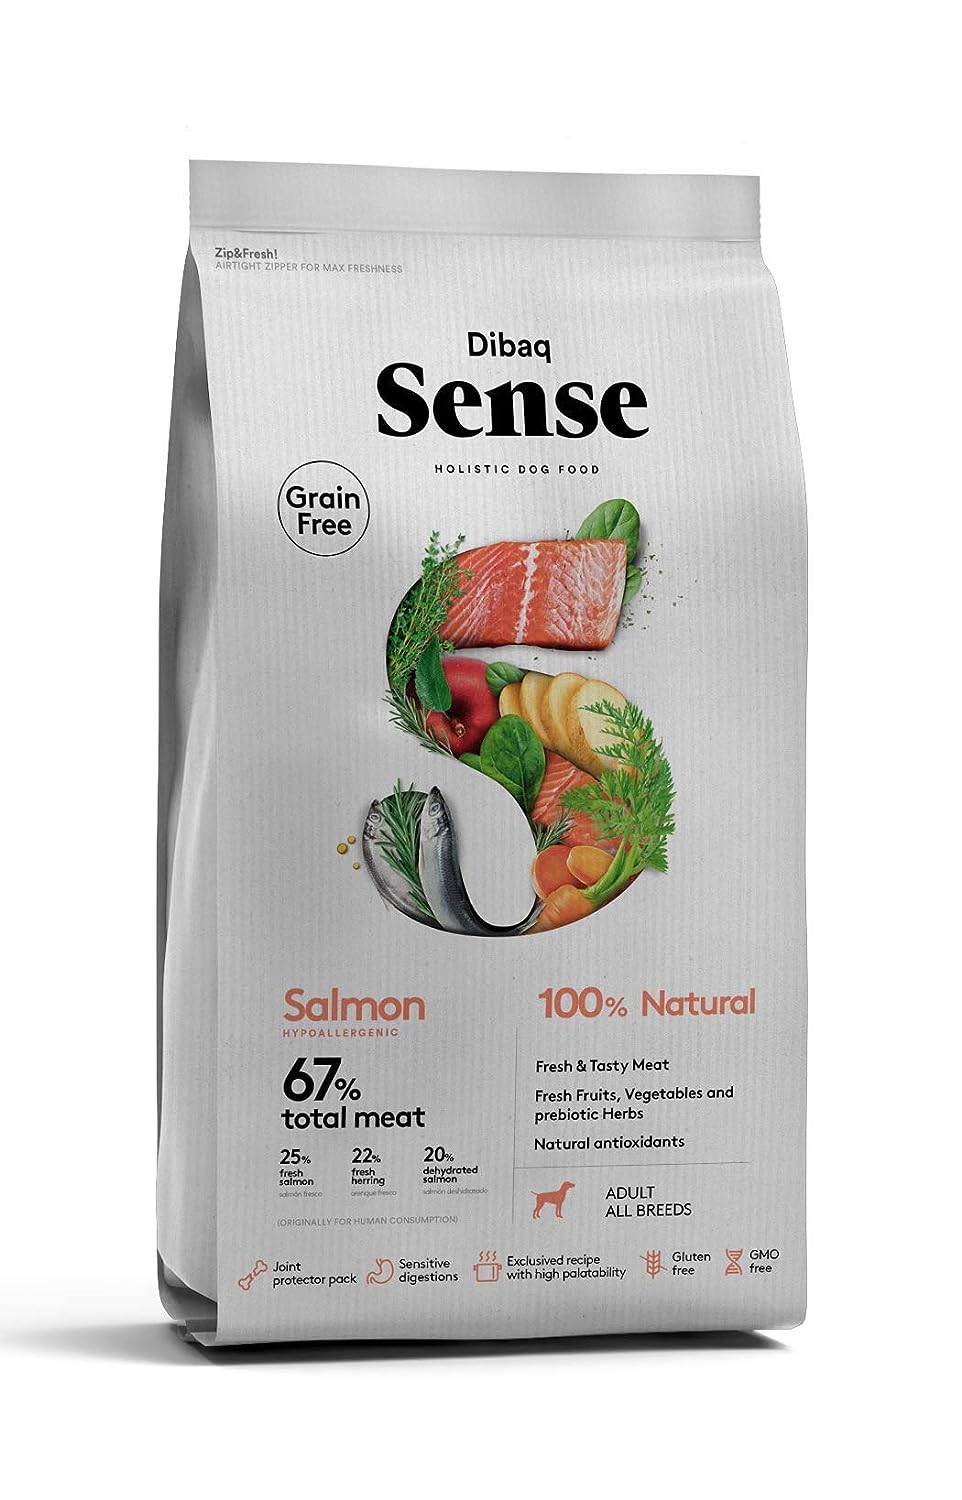 Dibaq Sense Grain Free Salmon Hypoallergenic Dog food